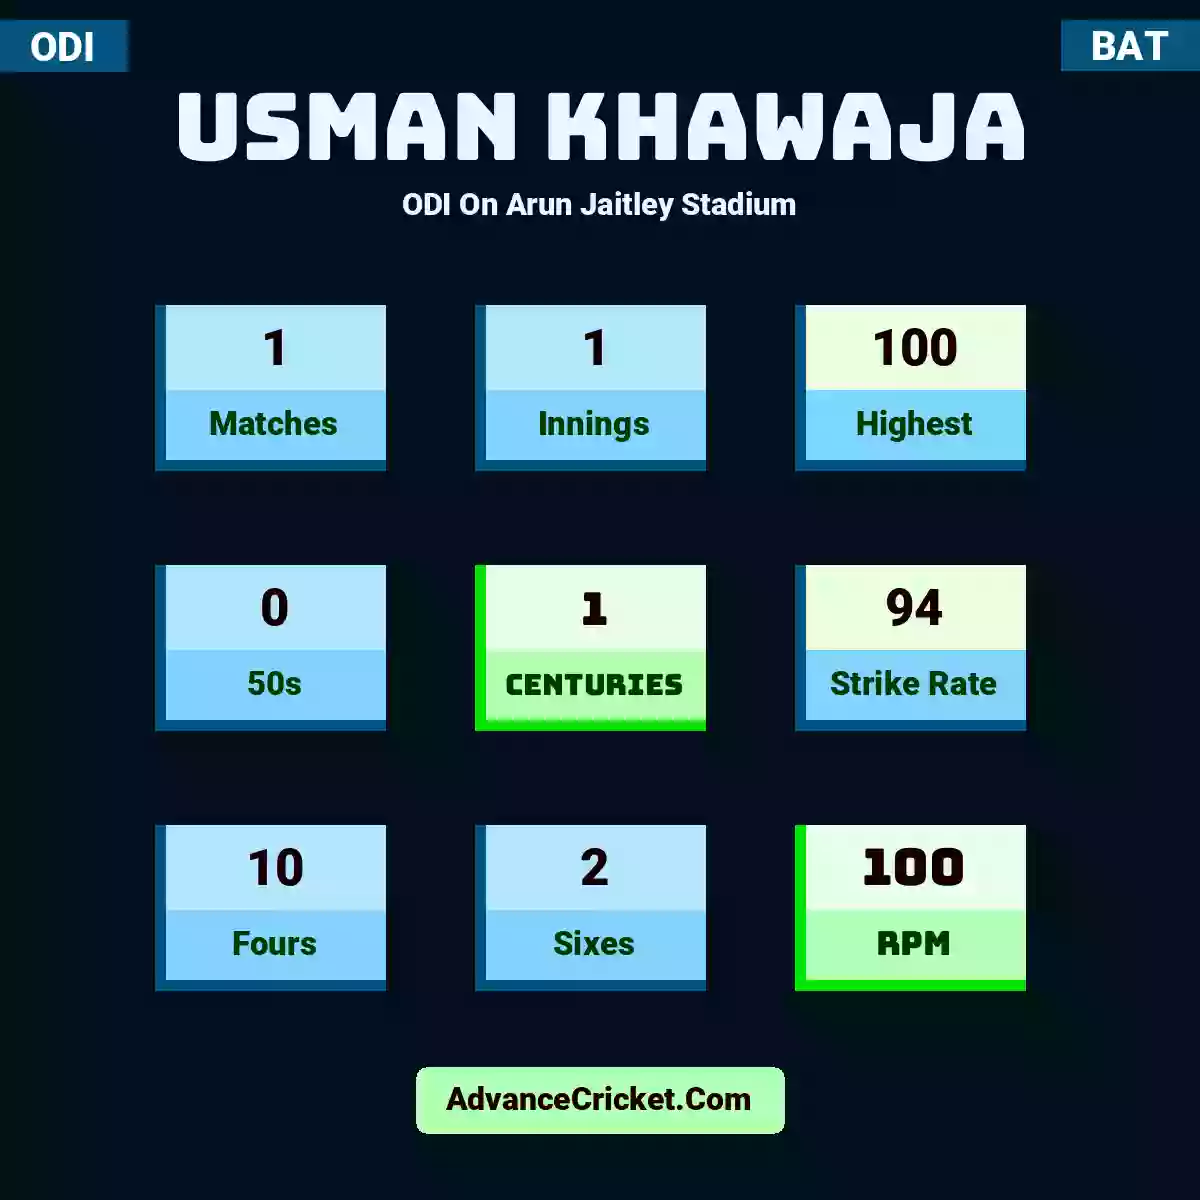 Usman Khawaja ODI  On Arun Jaitley Stadium, Usman Khawaja played 1 matches, scored 100 runs as highest, 0 half-centuries, and 1 centuries, with a strike rate of 94. U.Khawaja hit 10 fours and 2 sixes, with an RPM of 100.